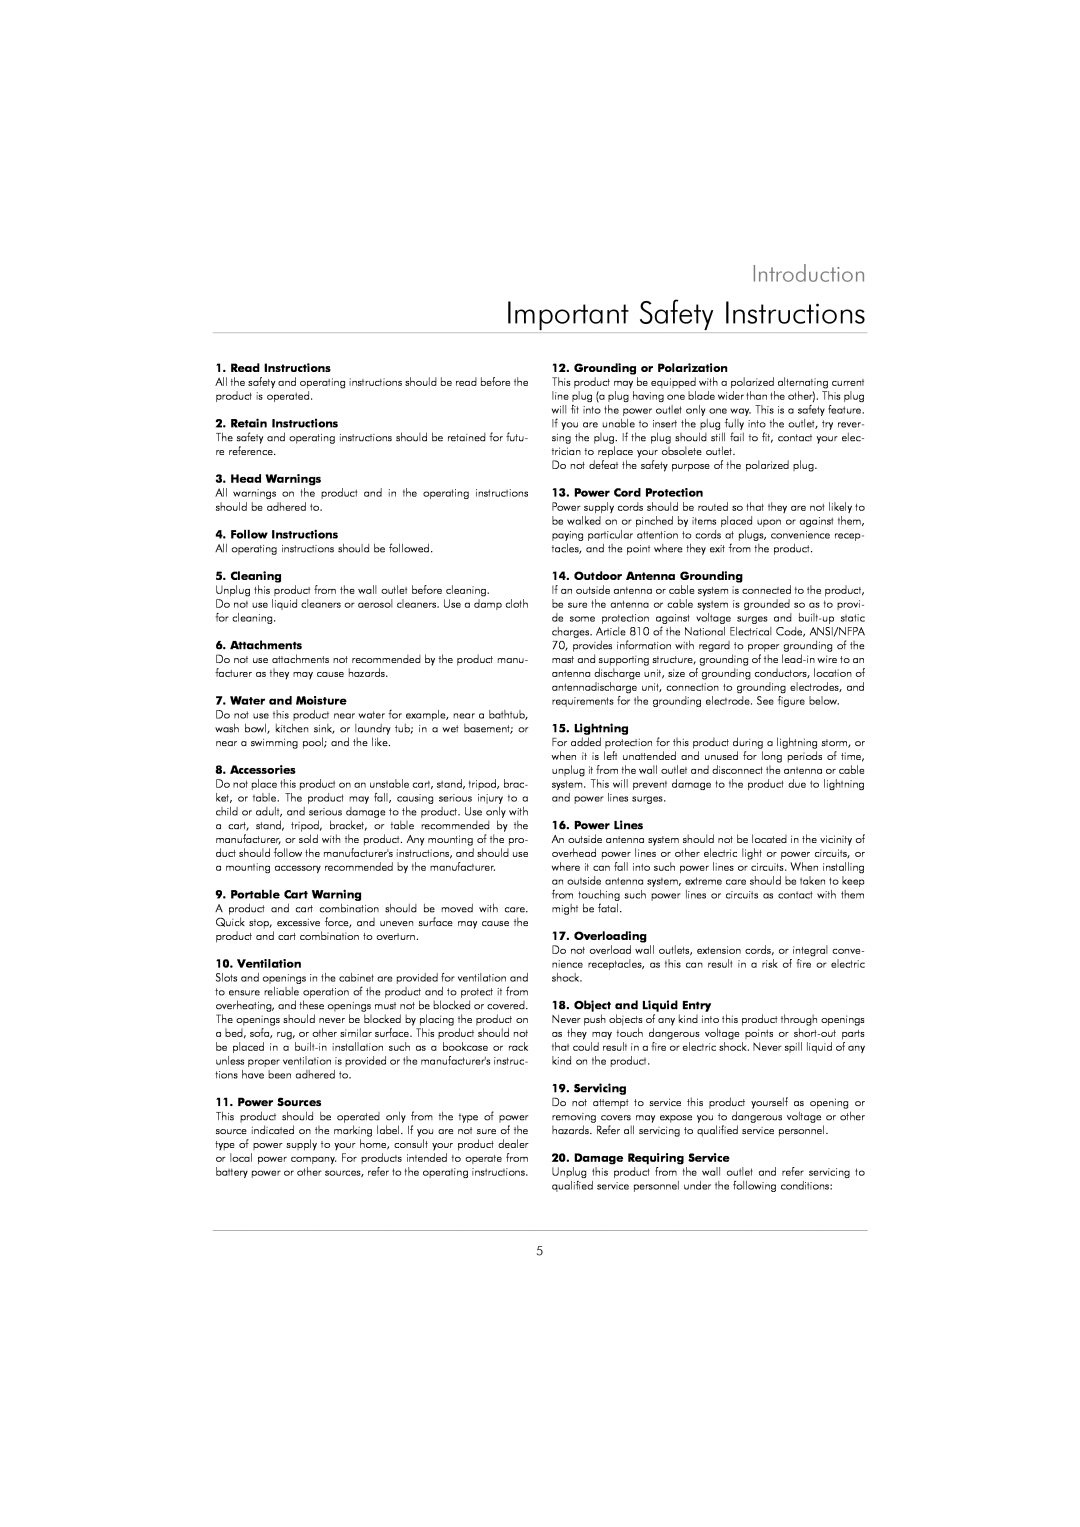 Kodak DVD 40 user manual Important Safety Instructions, Introduction 